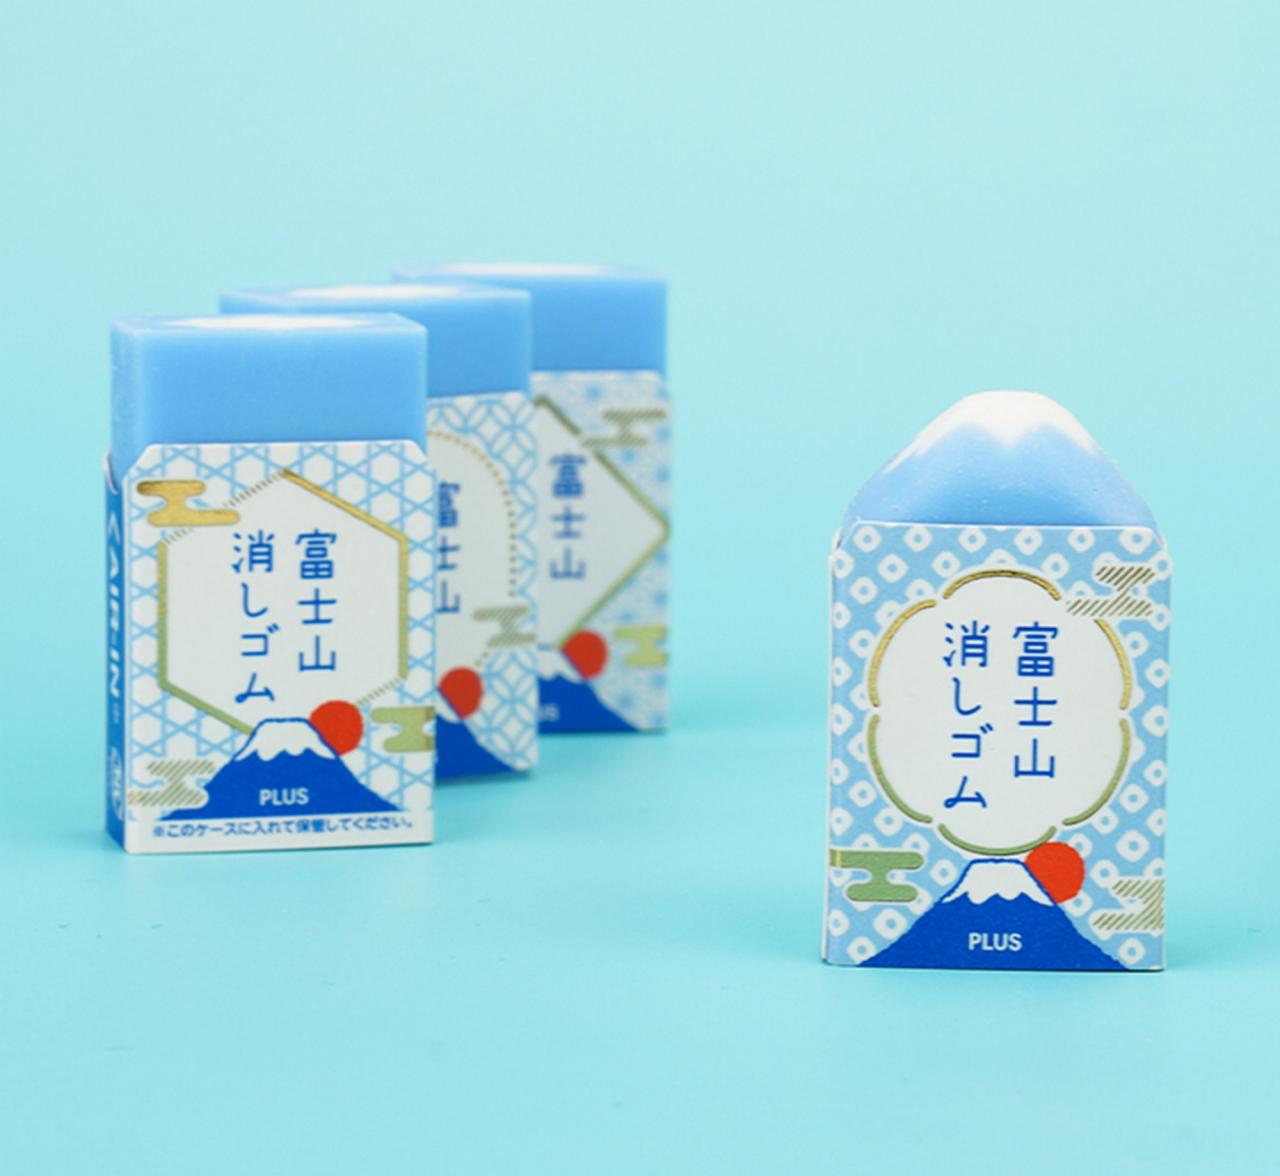 Japan Fuji Mountain Eraser | Rubber Eraser without Residue | White Blue Fuji Mountain Rubber | Signature Fuji Japan Design Office Accessory